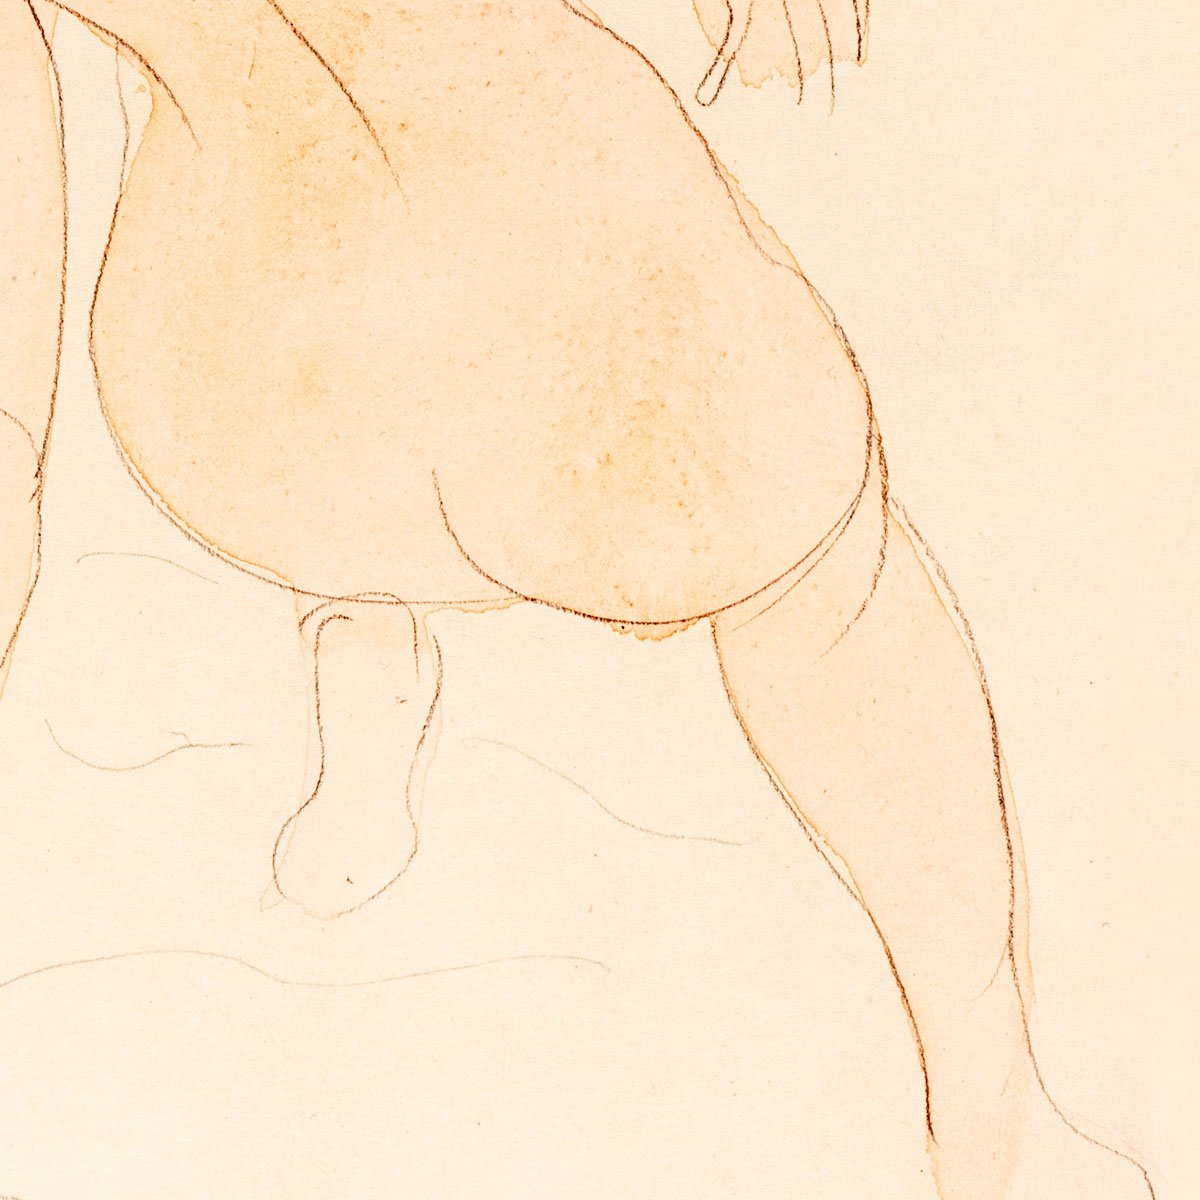 Naked Women Hugging by Rodin Art Poster